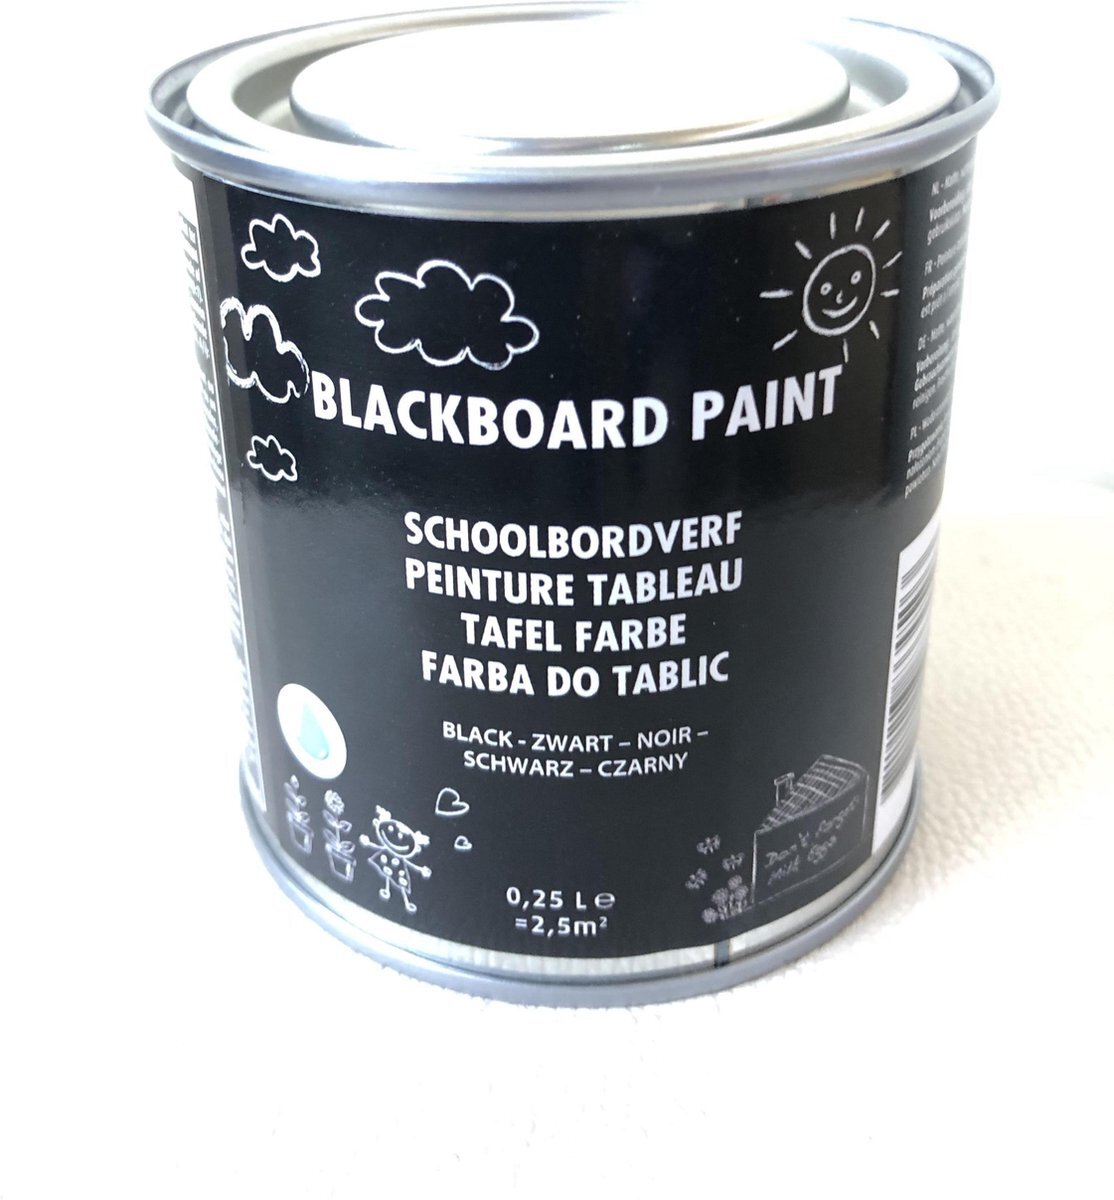 Blackboard Paint Schoolbordverf 0,25 liter